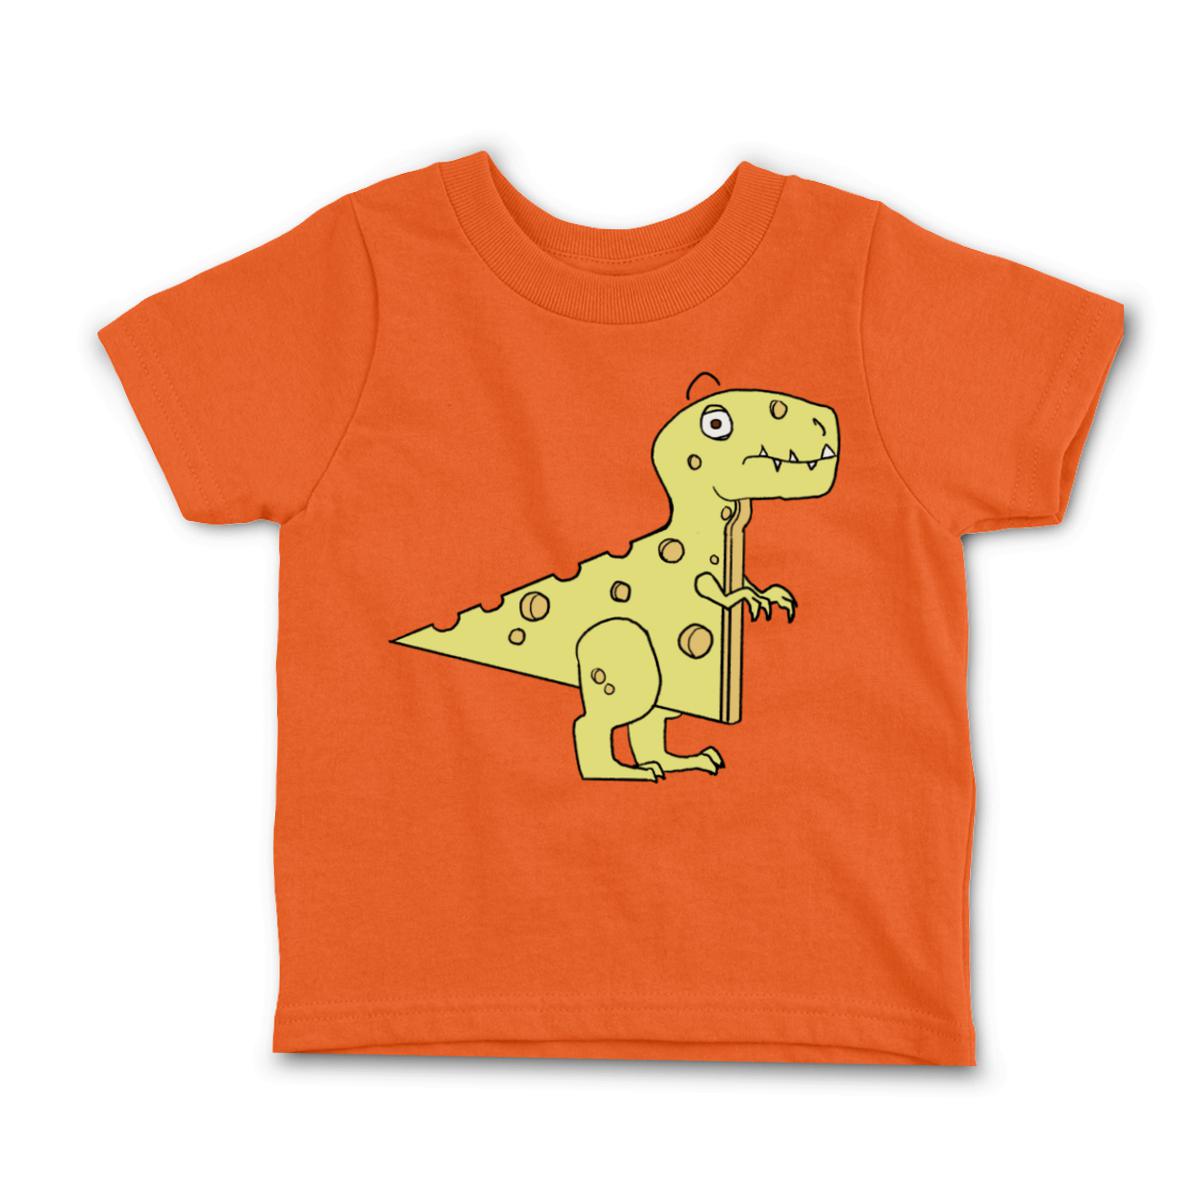 Cheeseosaurus Rex Infant Tee 18M orange